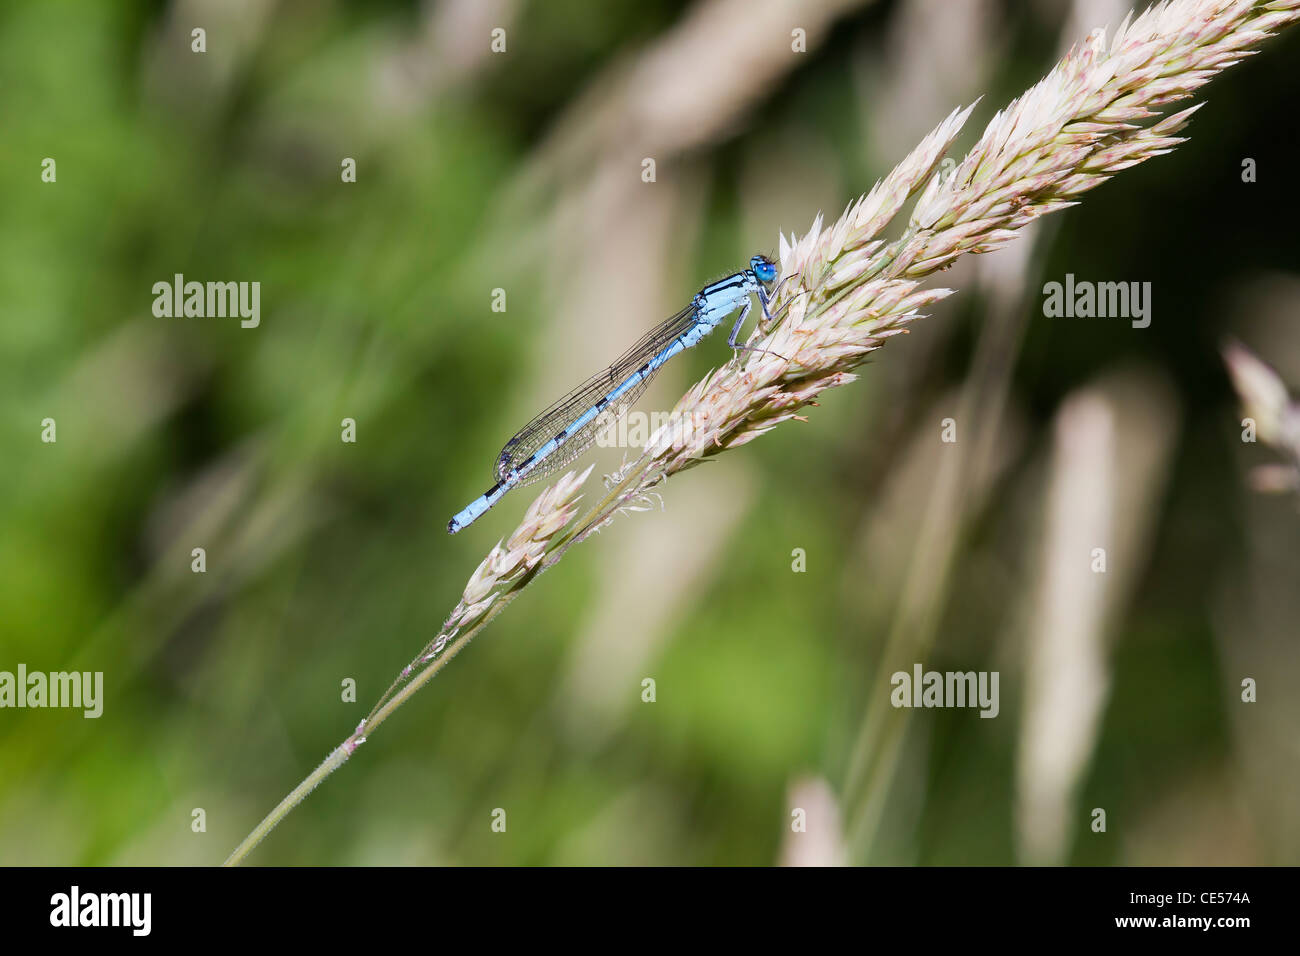 Blue Damselfly resting on a grass stem closeup Stock Photo